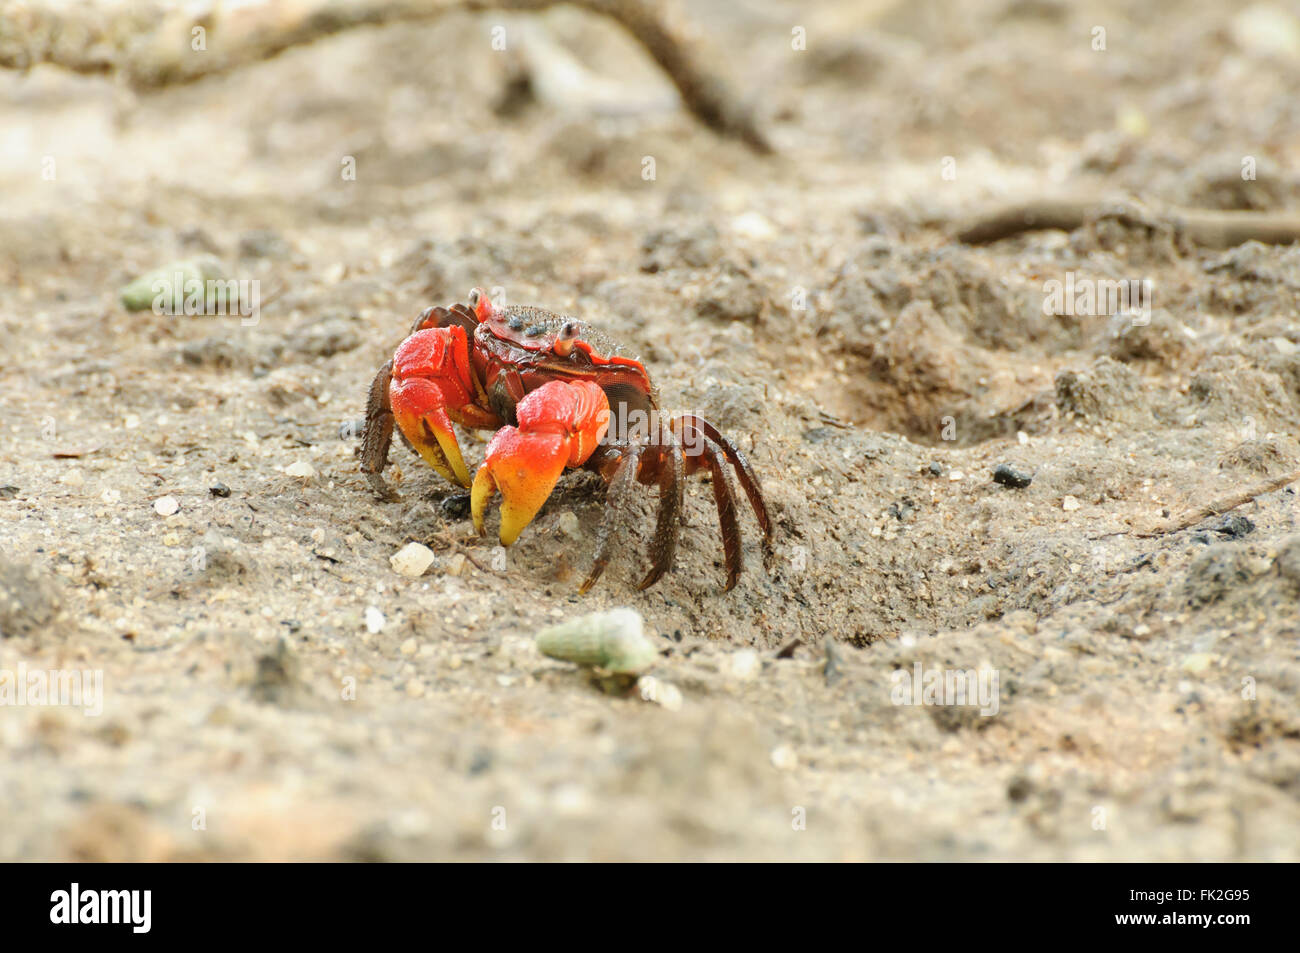 Parasesarma Leptosoma: Eine Arboreal Krabben auf dem sand Stockfoto